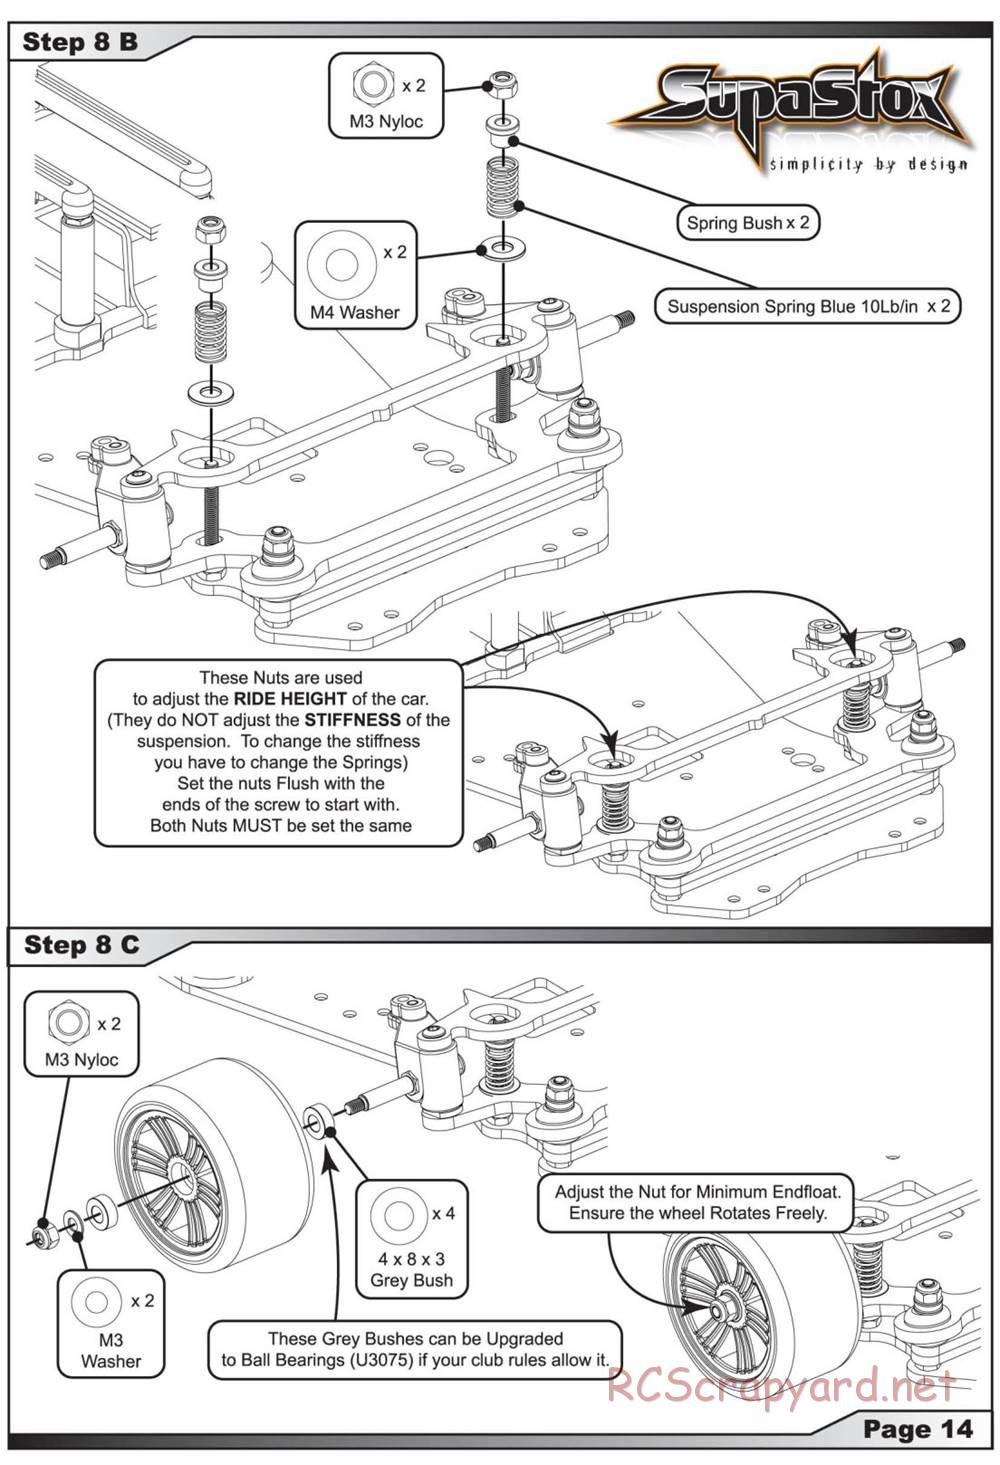 Schumacher - SupaStox - Manual - Page 15